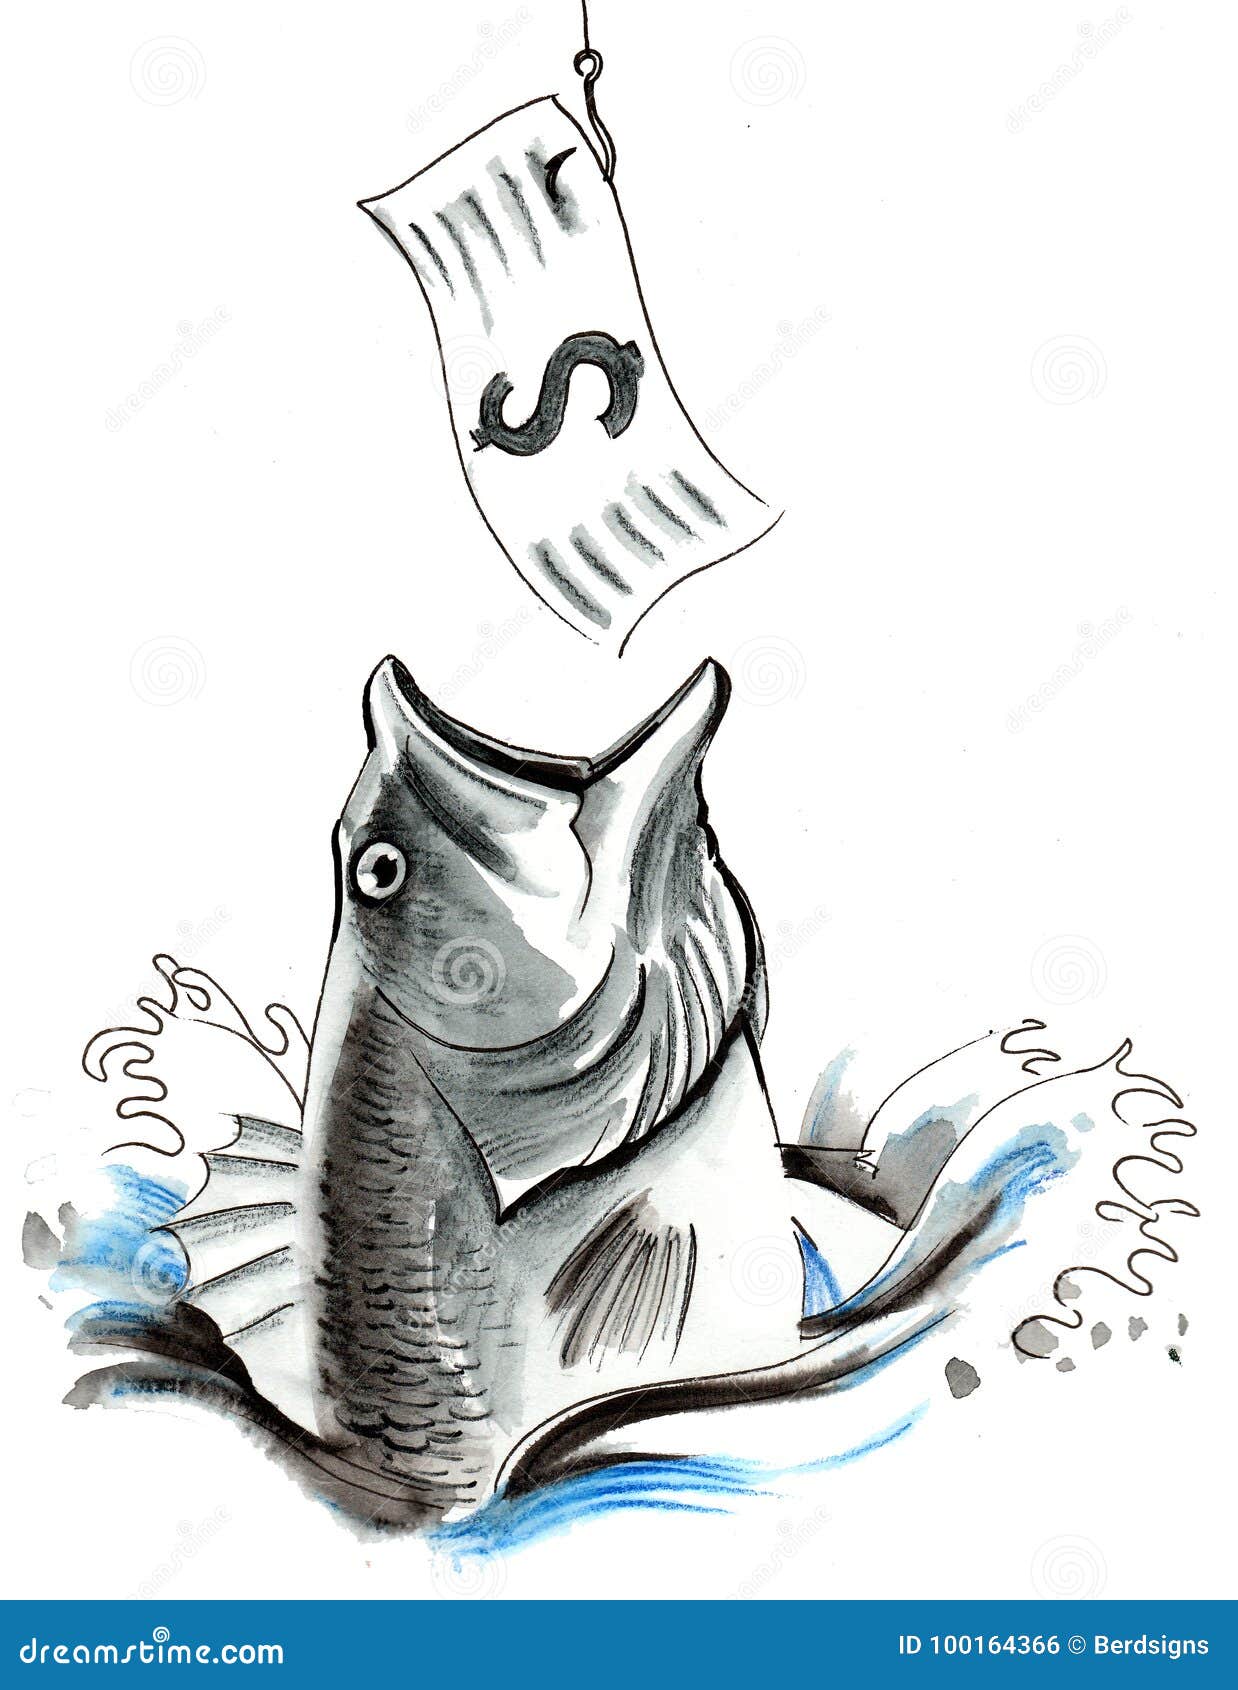 Fishing with money stock illustration. Illustration of funny